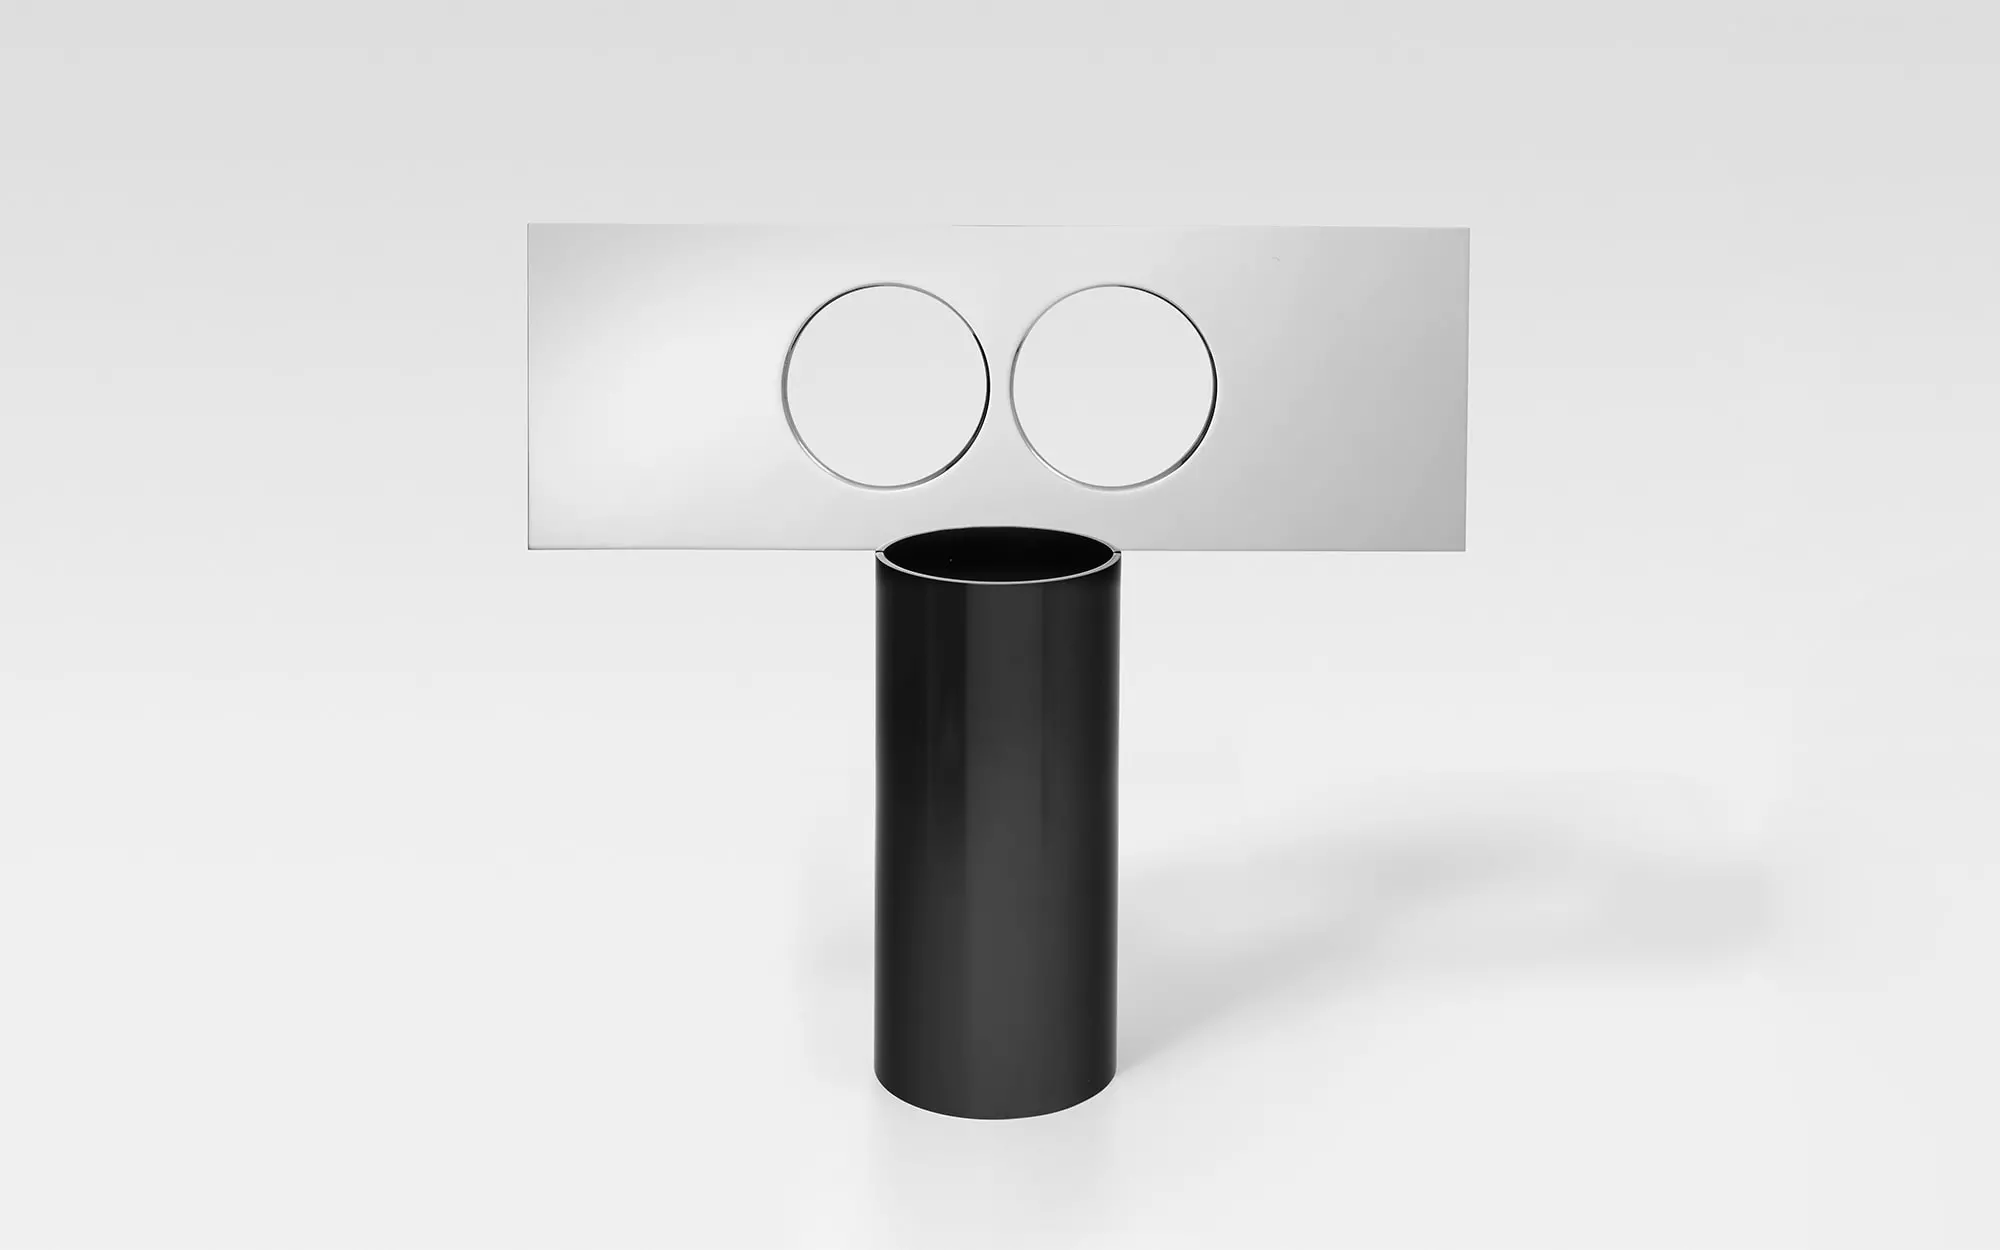 Lunettes - 2 Vase - Pierre Charpin - Bench - Galerie kreo